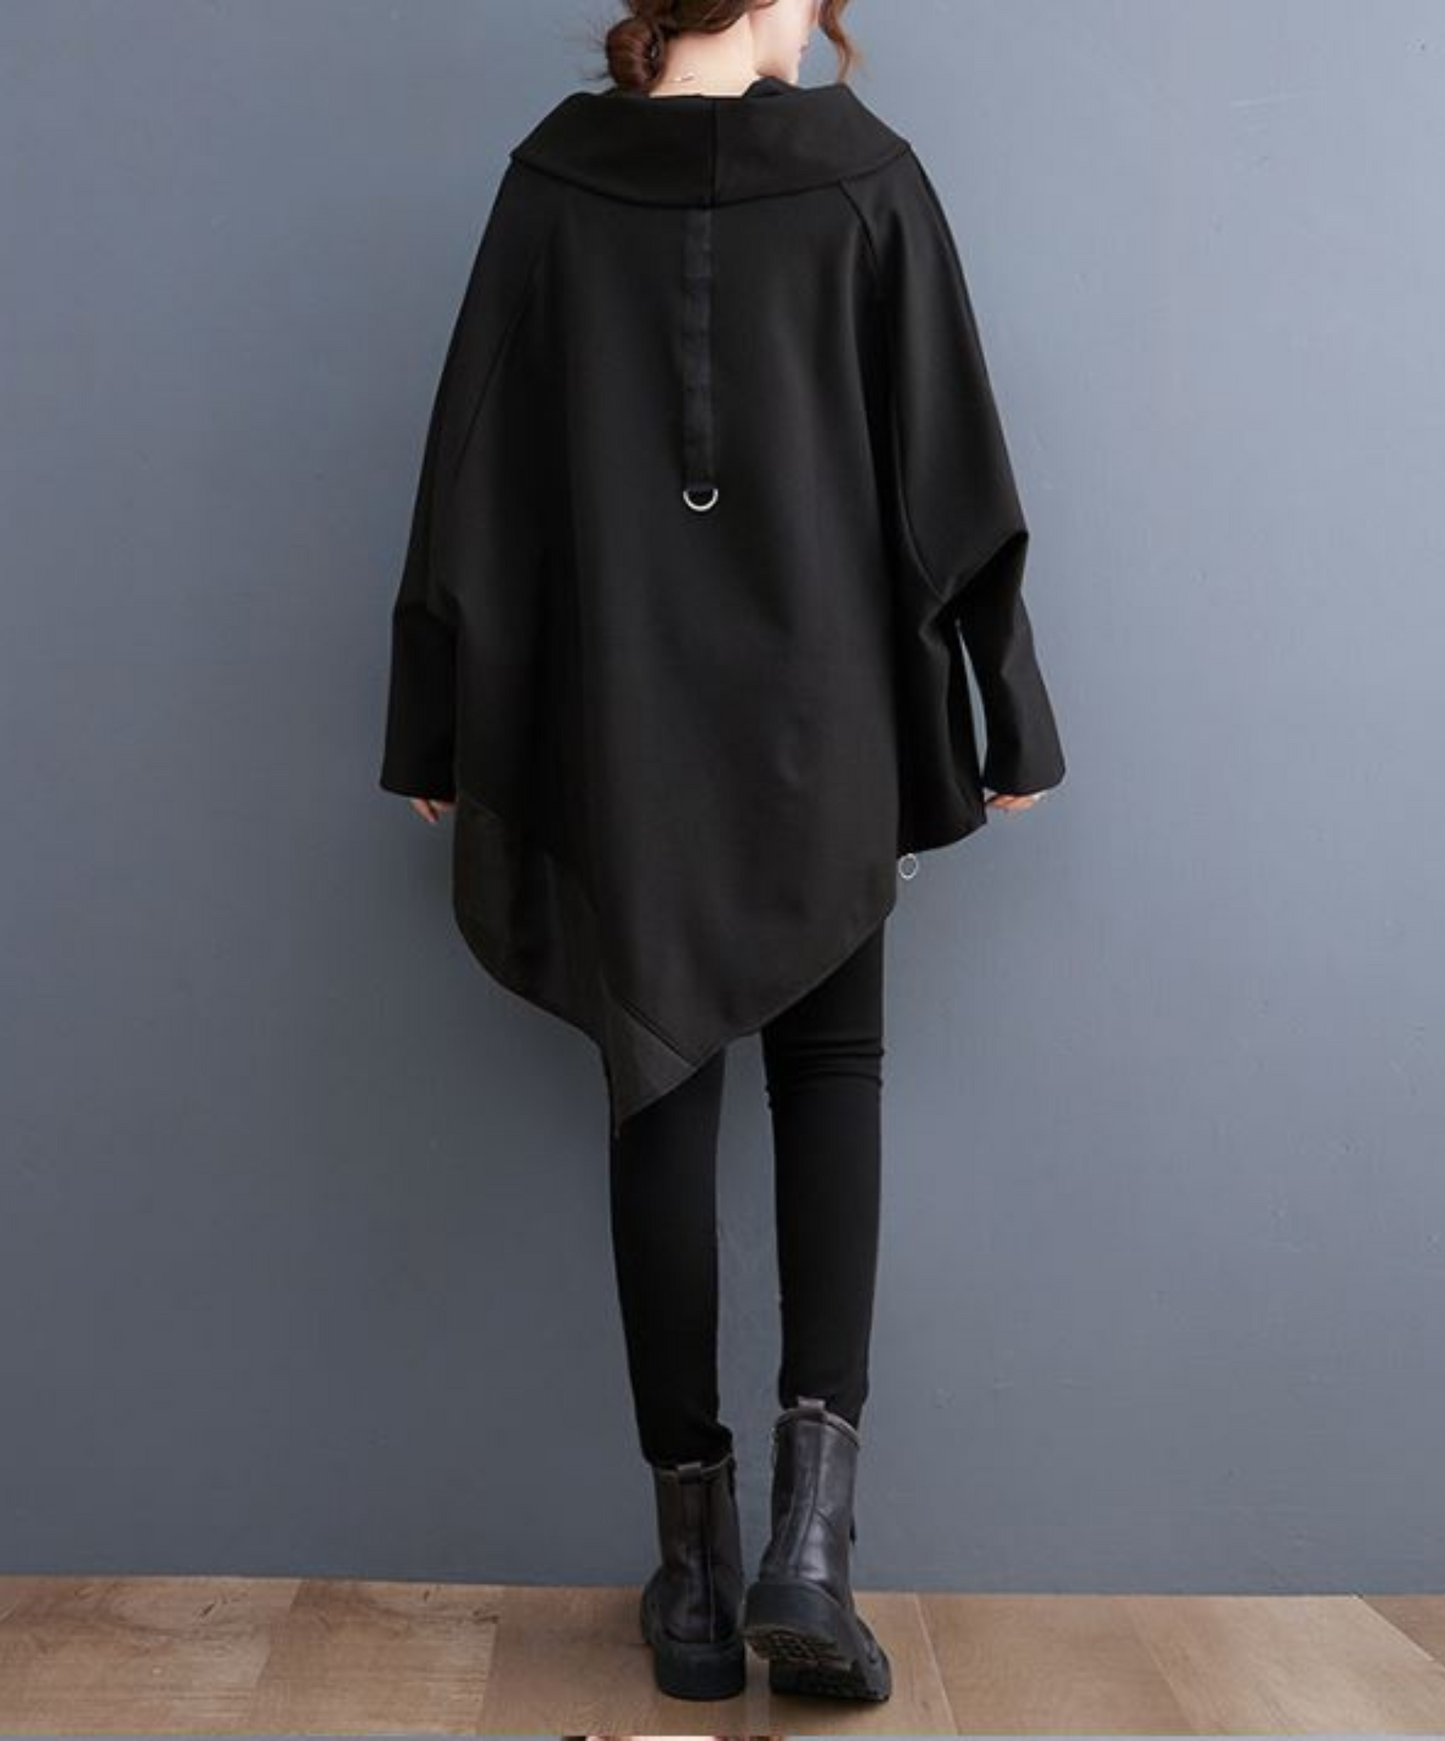 dark asymmetrical zip sweatshirt EN884